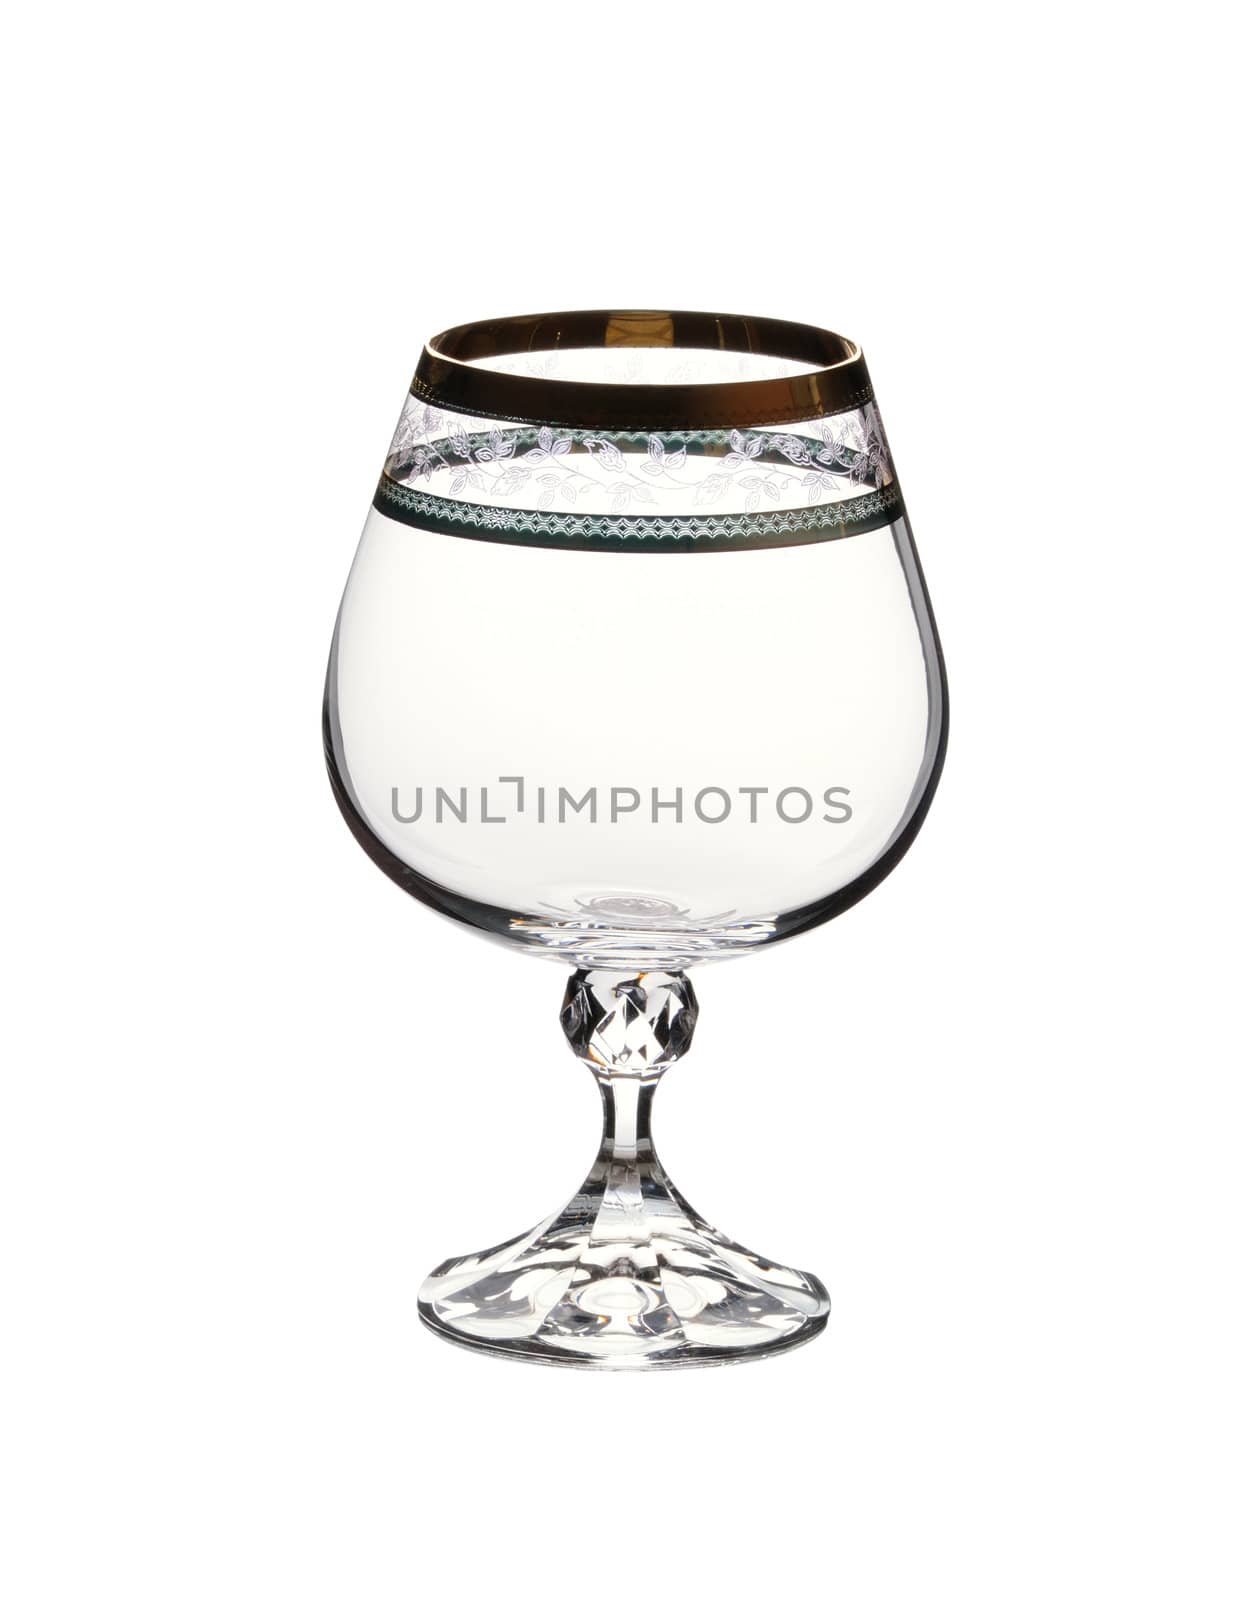 Wineglass by uriy2007